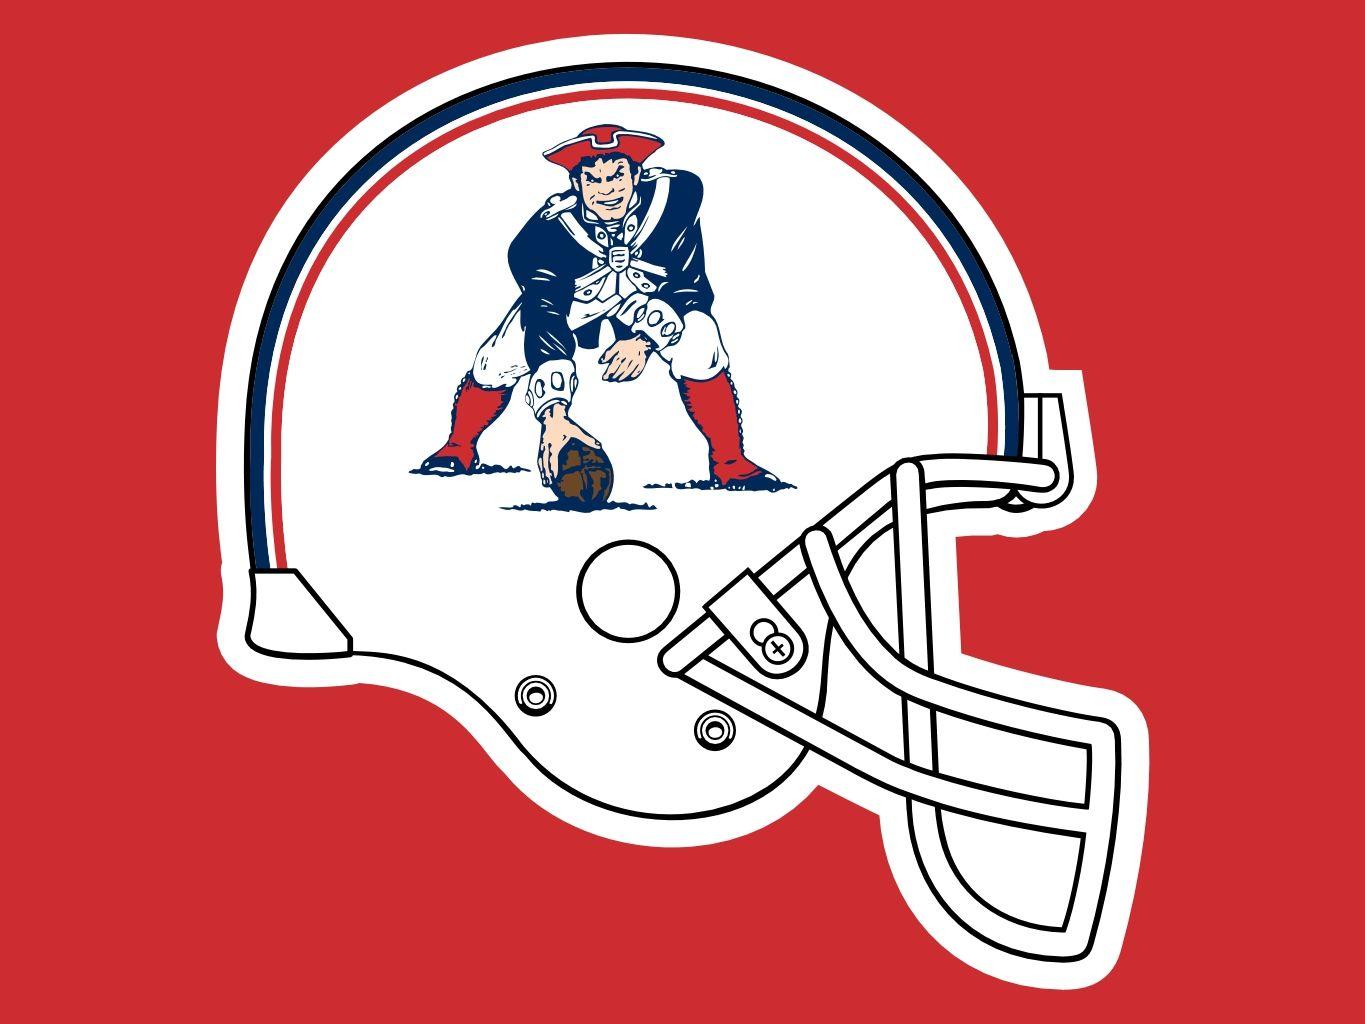 Old Patriots Logo - New England Patriots Old Logo N2 free image